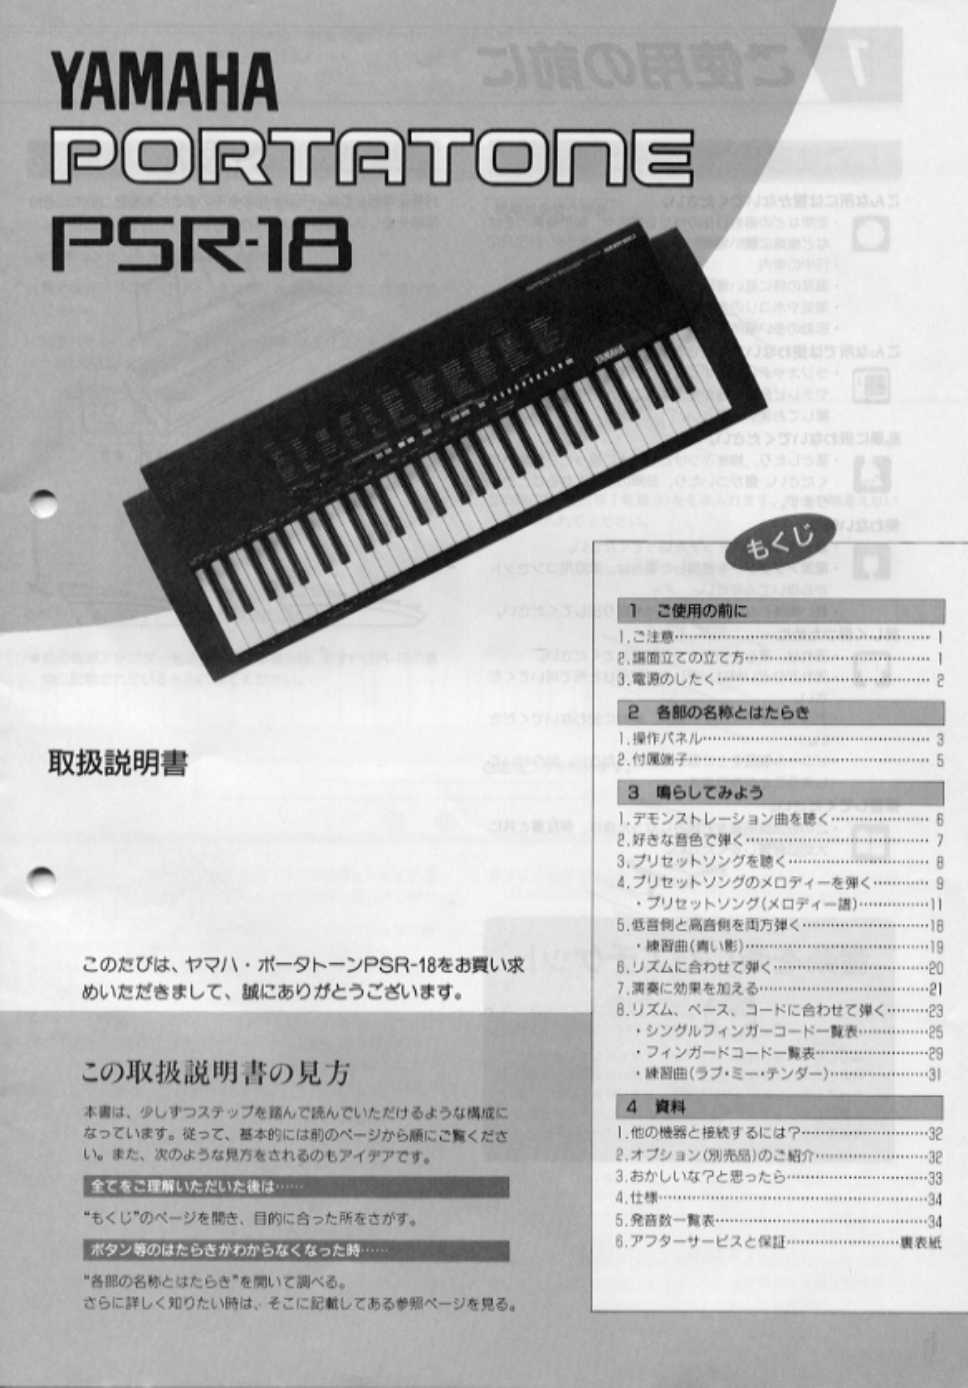 Yamaha Ypt-300 Manual Download